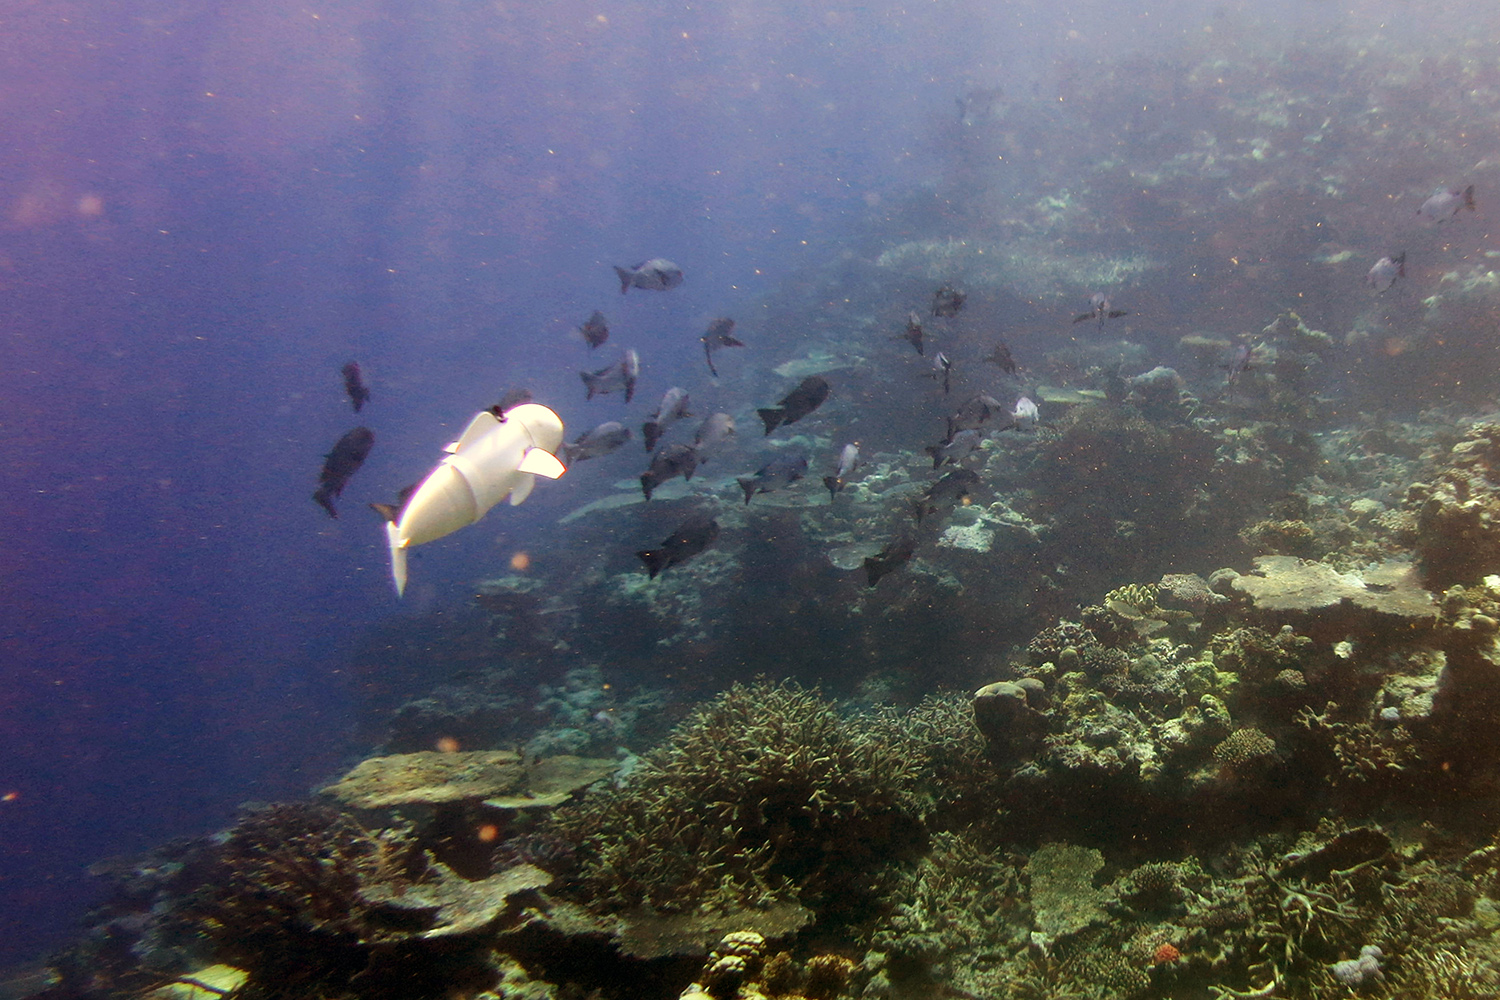 MIT's Soft Robotic Fish Swims Among Real Fish in Fiji